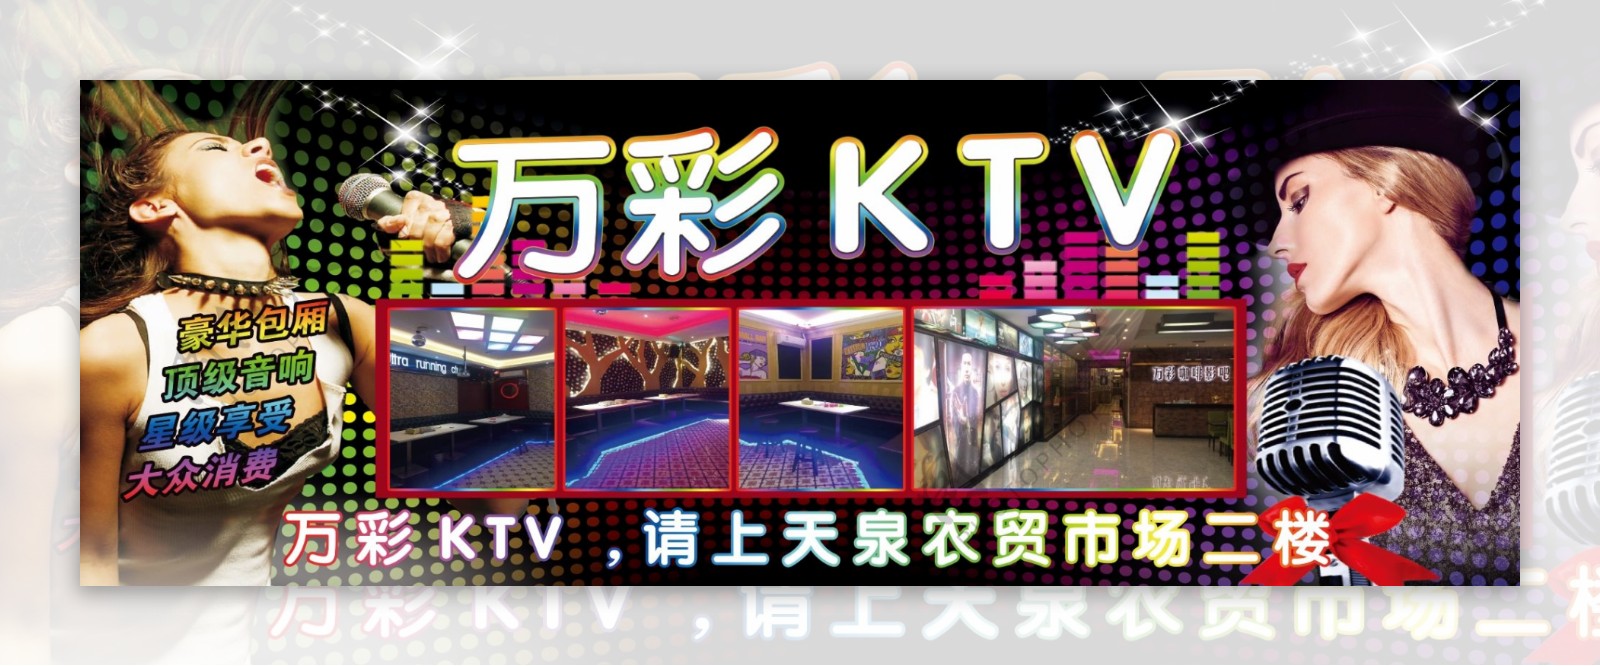 KTV娱乐会所